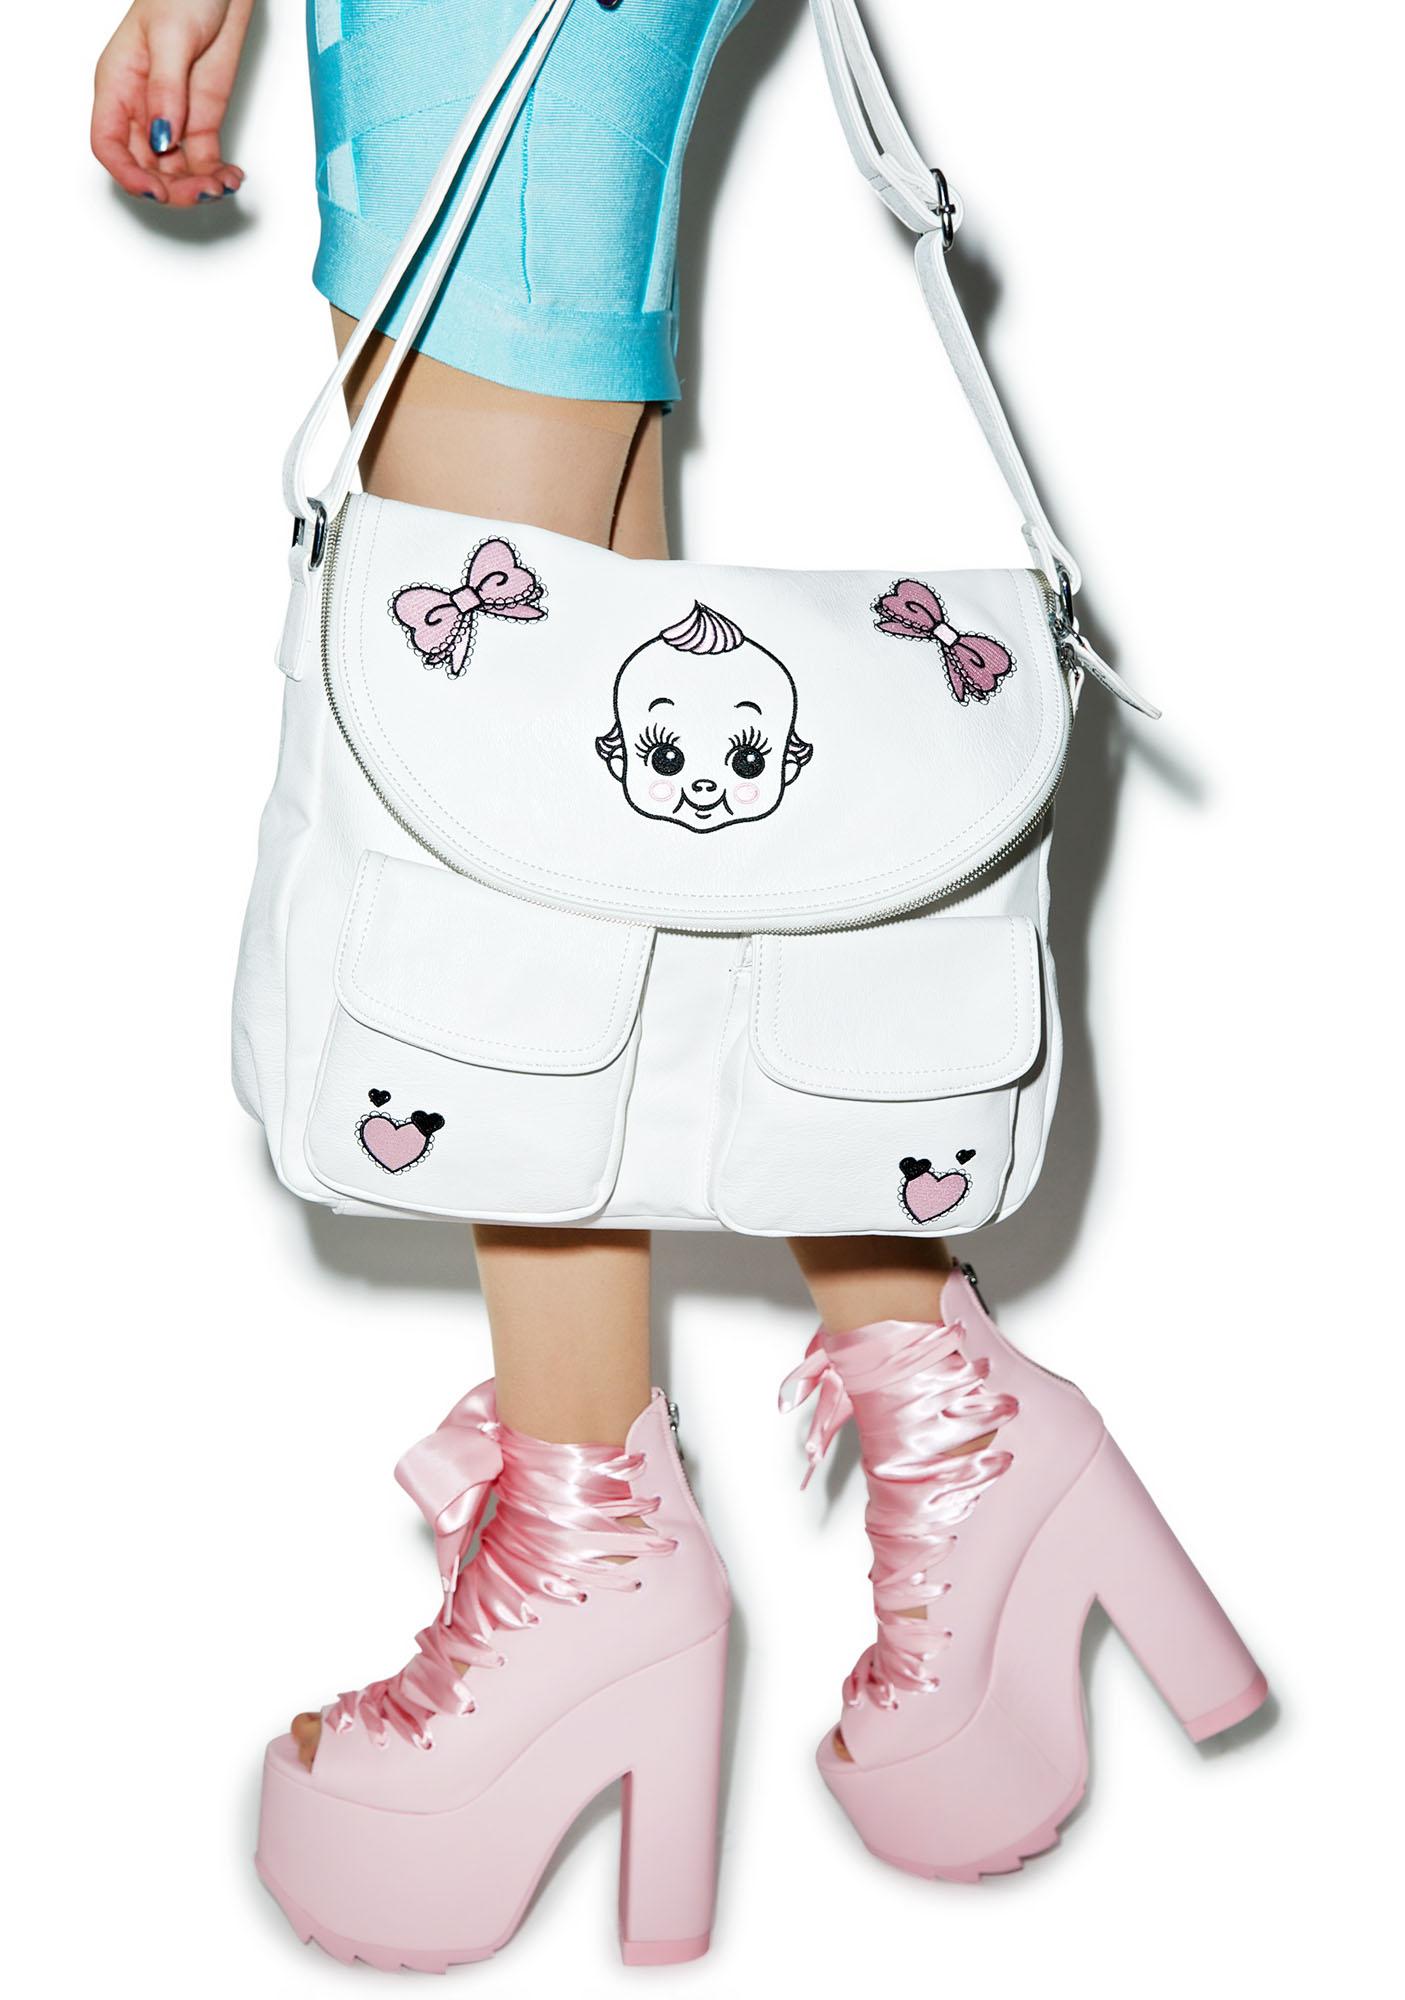 baby doll purse